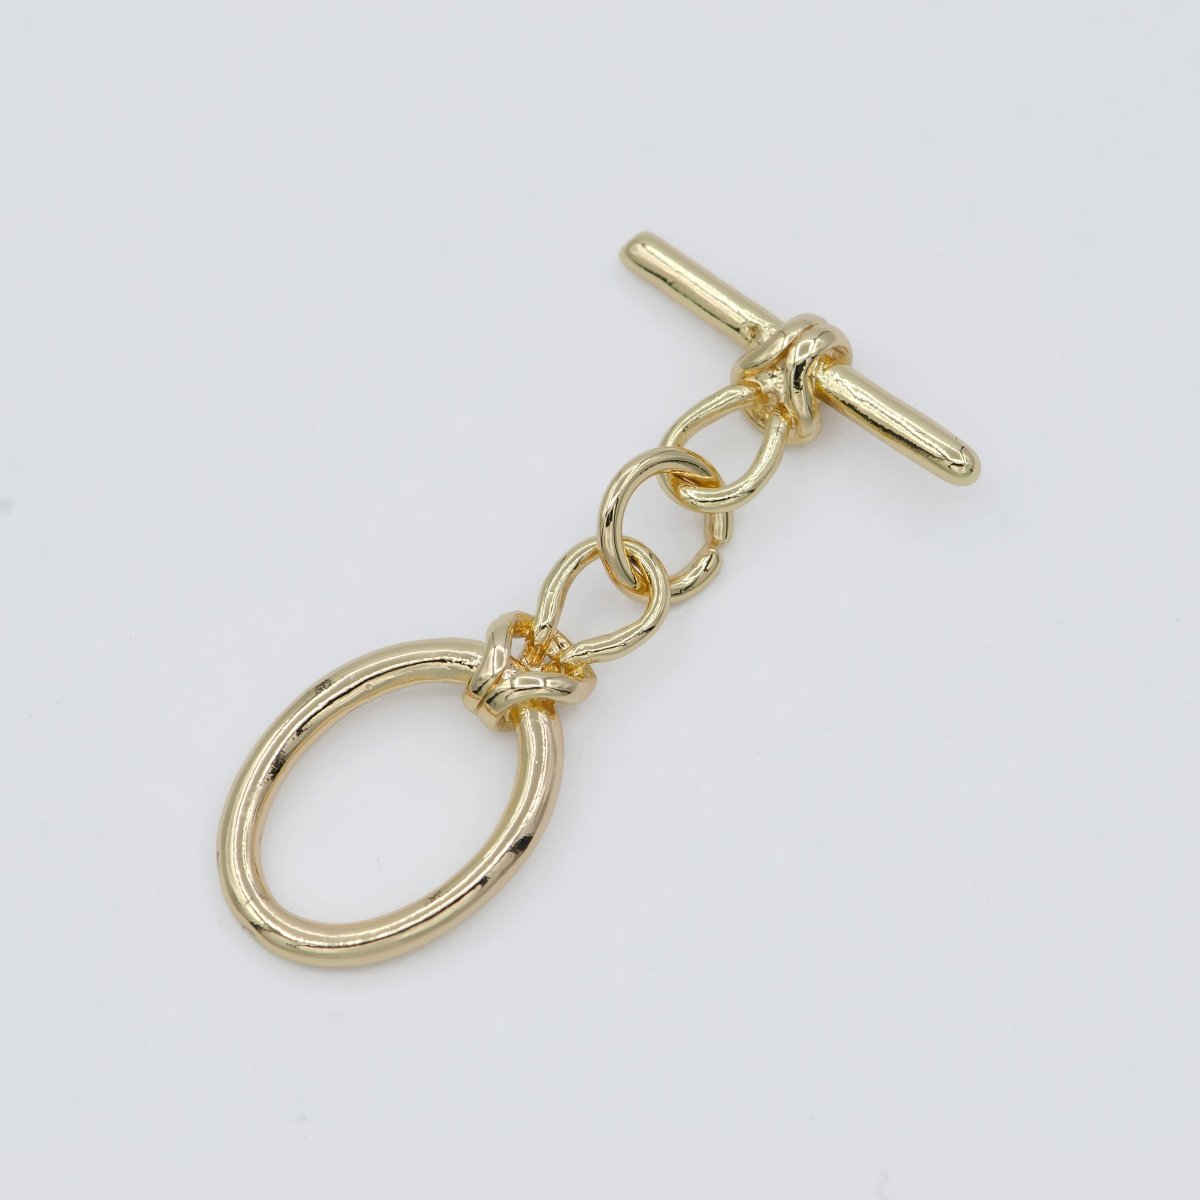 18K Gold Filled Oval Toggle Clasp DIY Jewelry Making For Necklace Bracelet Anklet L-309 - DLUXCA